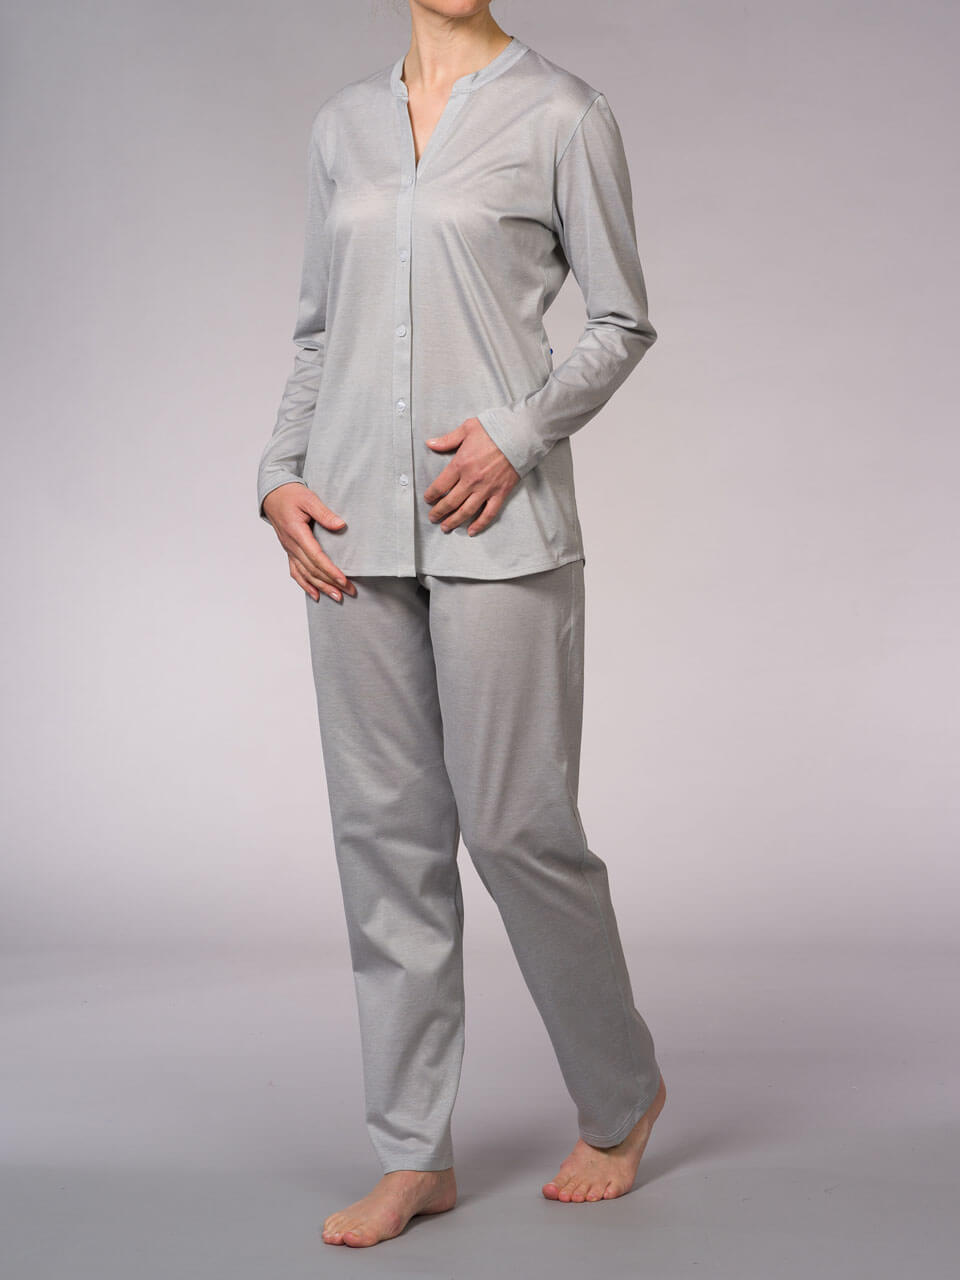 Novila   Novila Damen Schlafanzug    Luna 8706 Jersey Farbe taupe Baumwolle